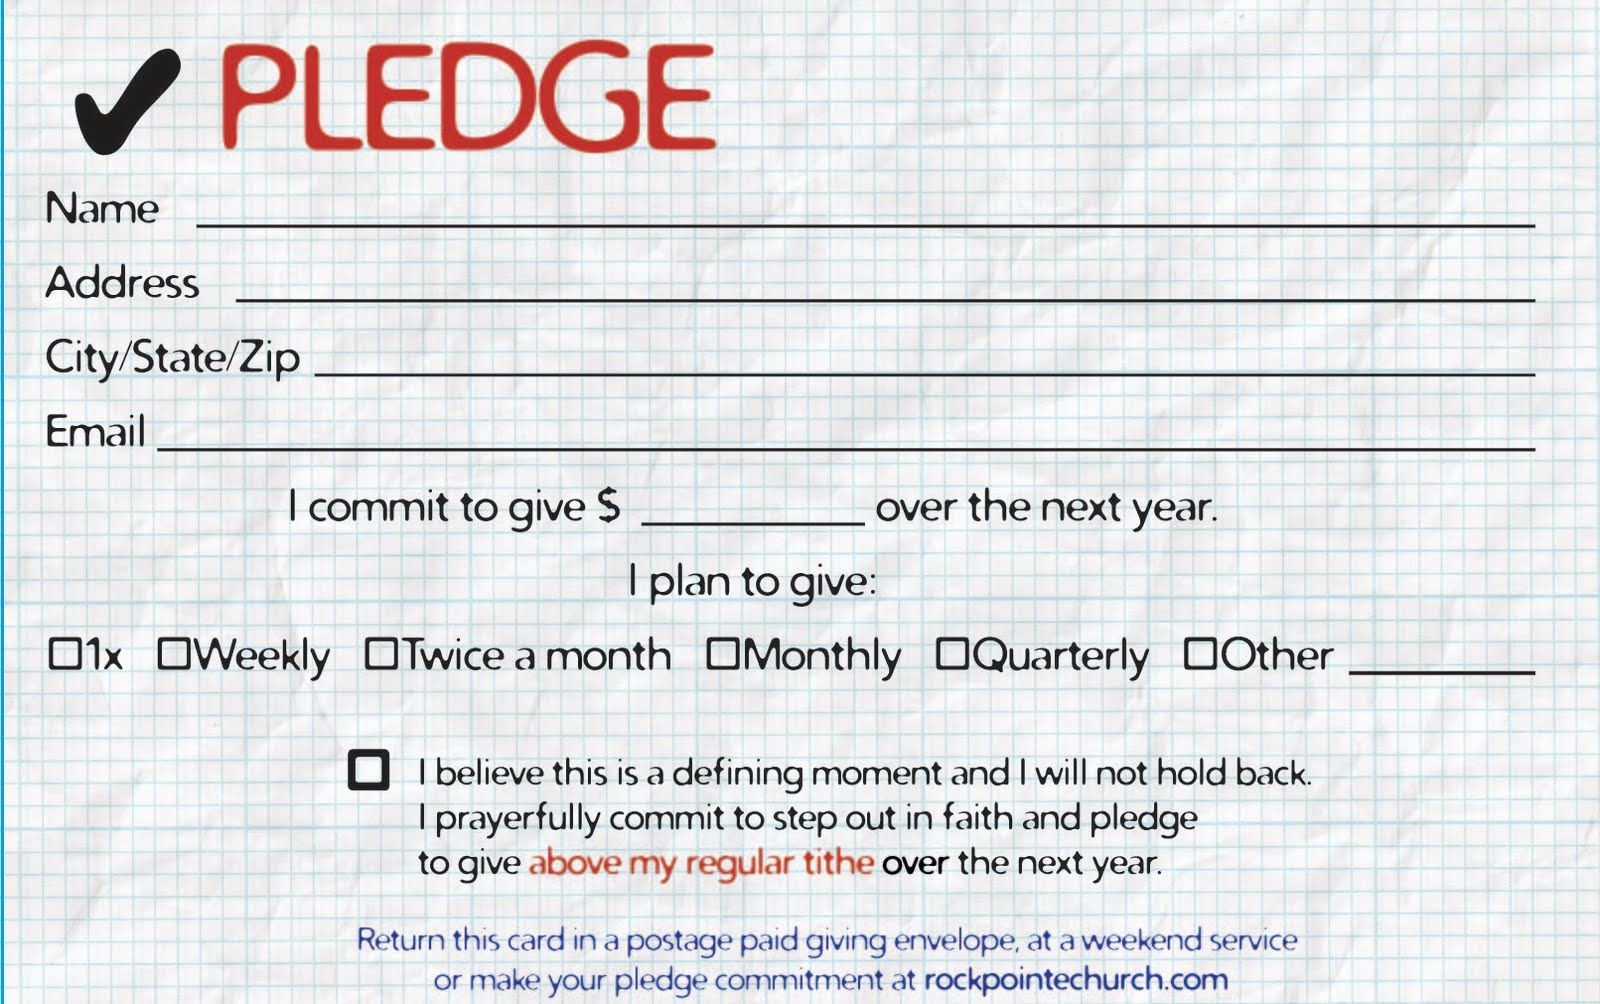 Pledge Cards For Churches | Pledge Card Templates | My Stuff Within Pledge Card Template For Church